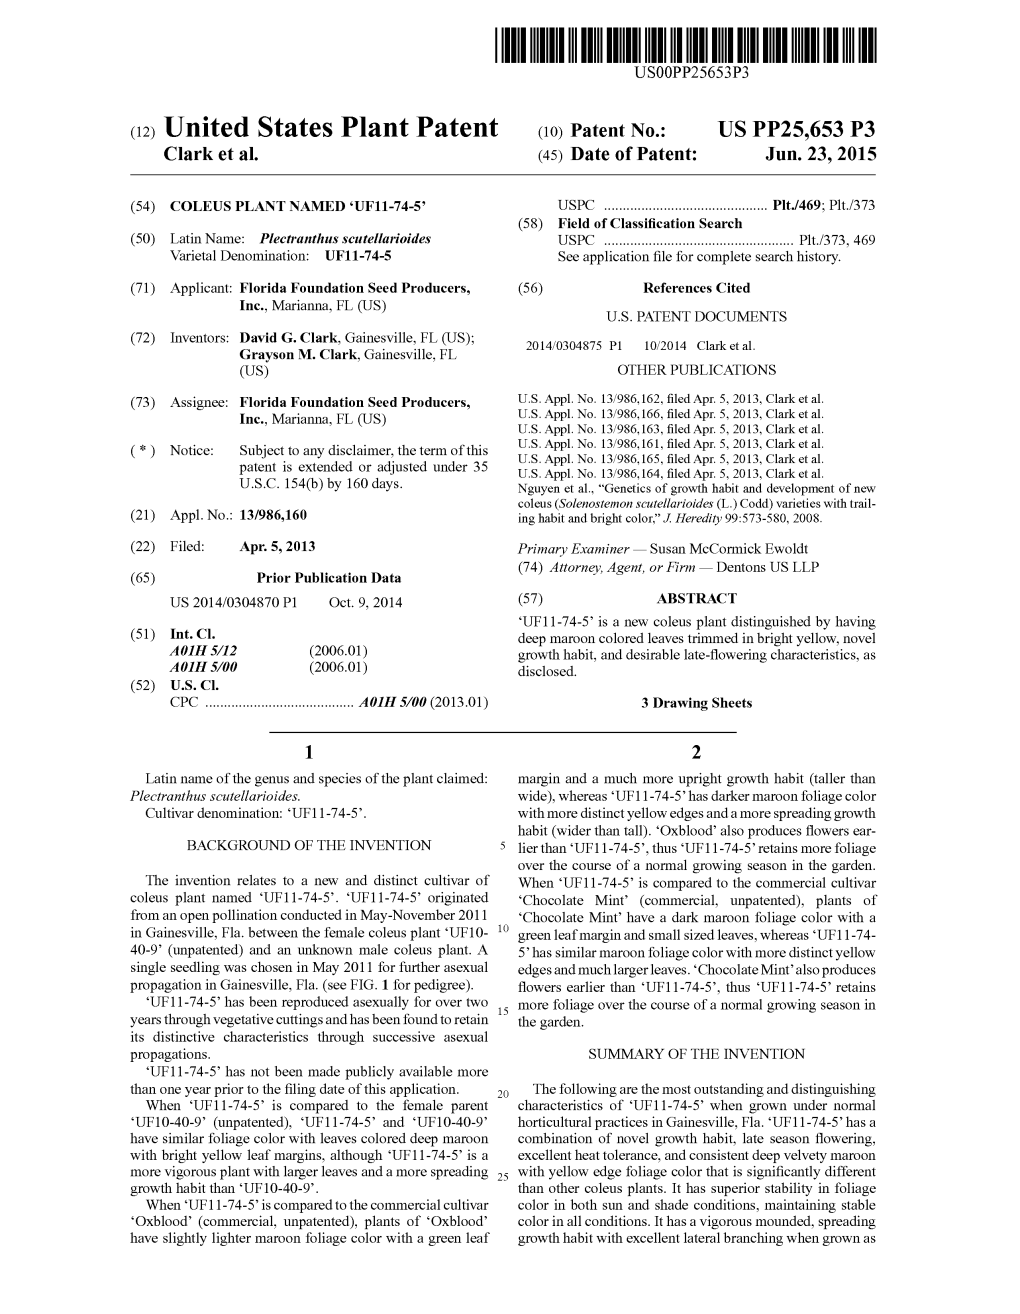 (12) United States Plant Patent (10) Patent No.: US PP25,653 P3 Clark Et Al